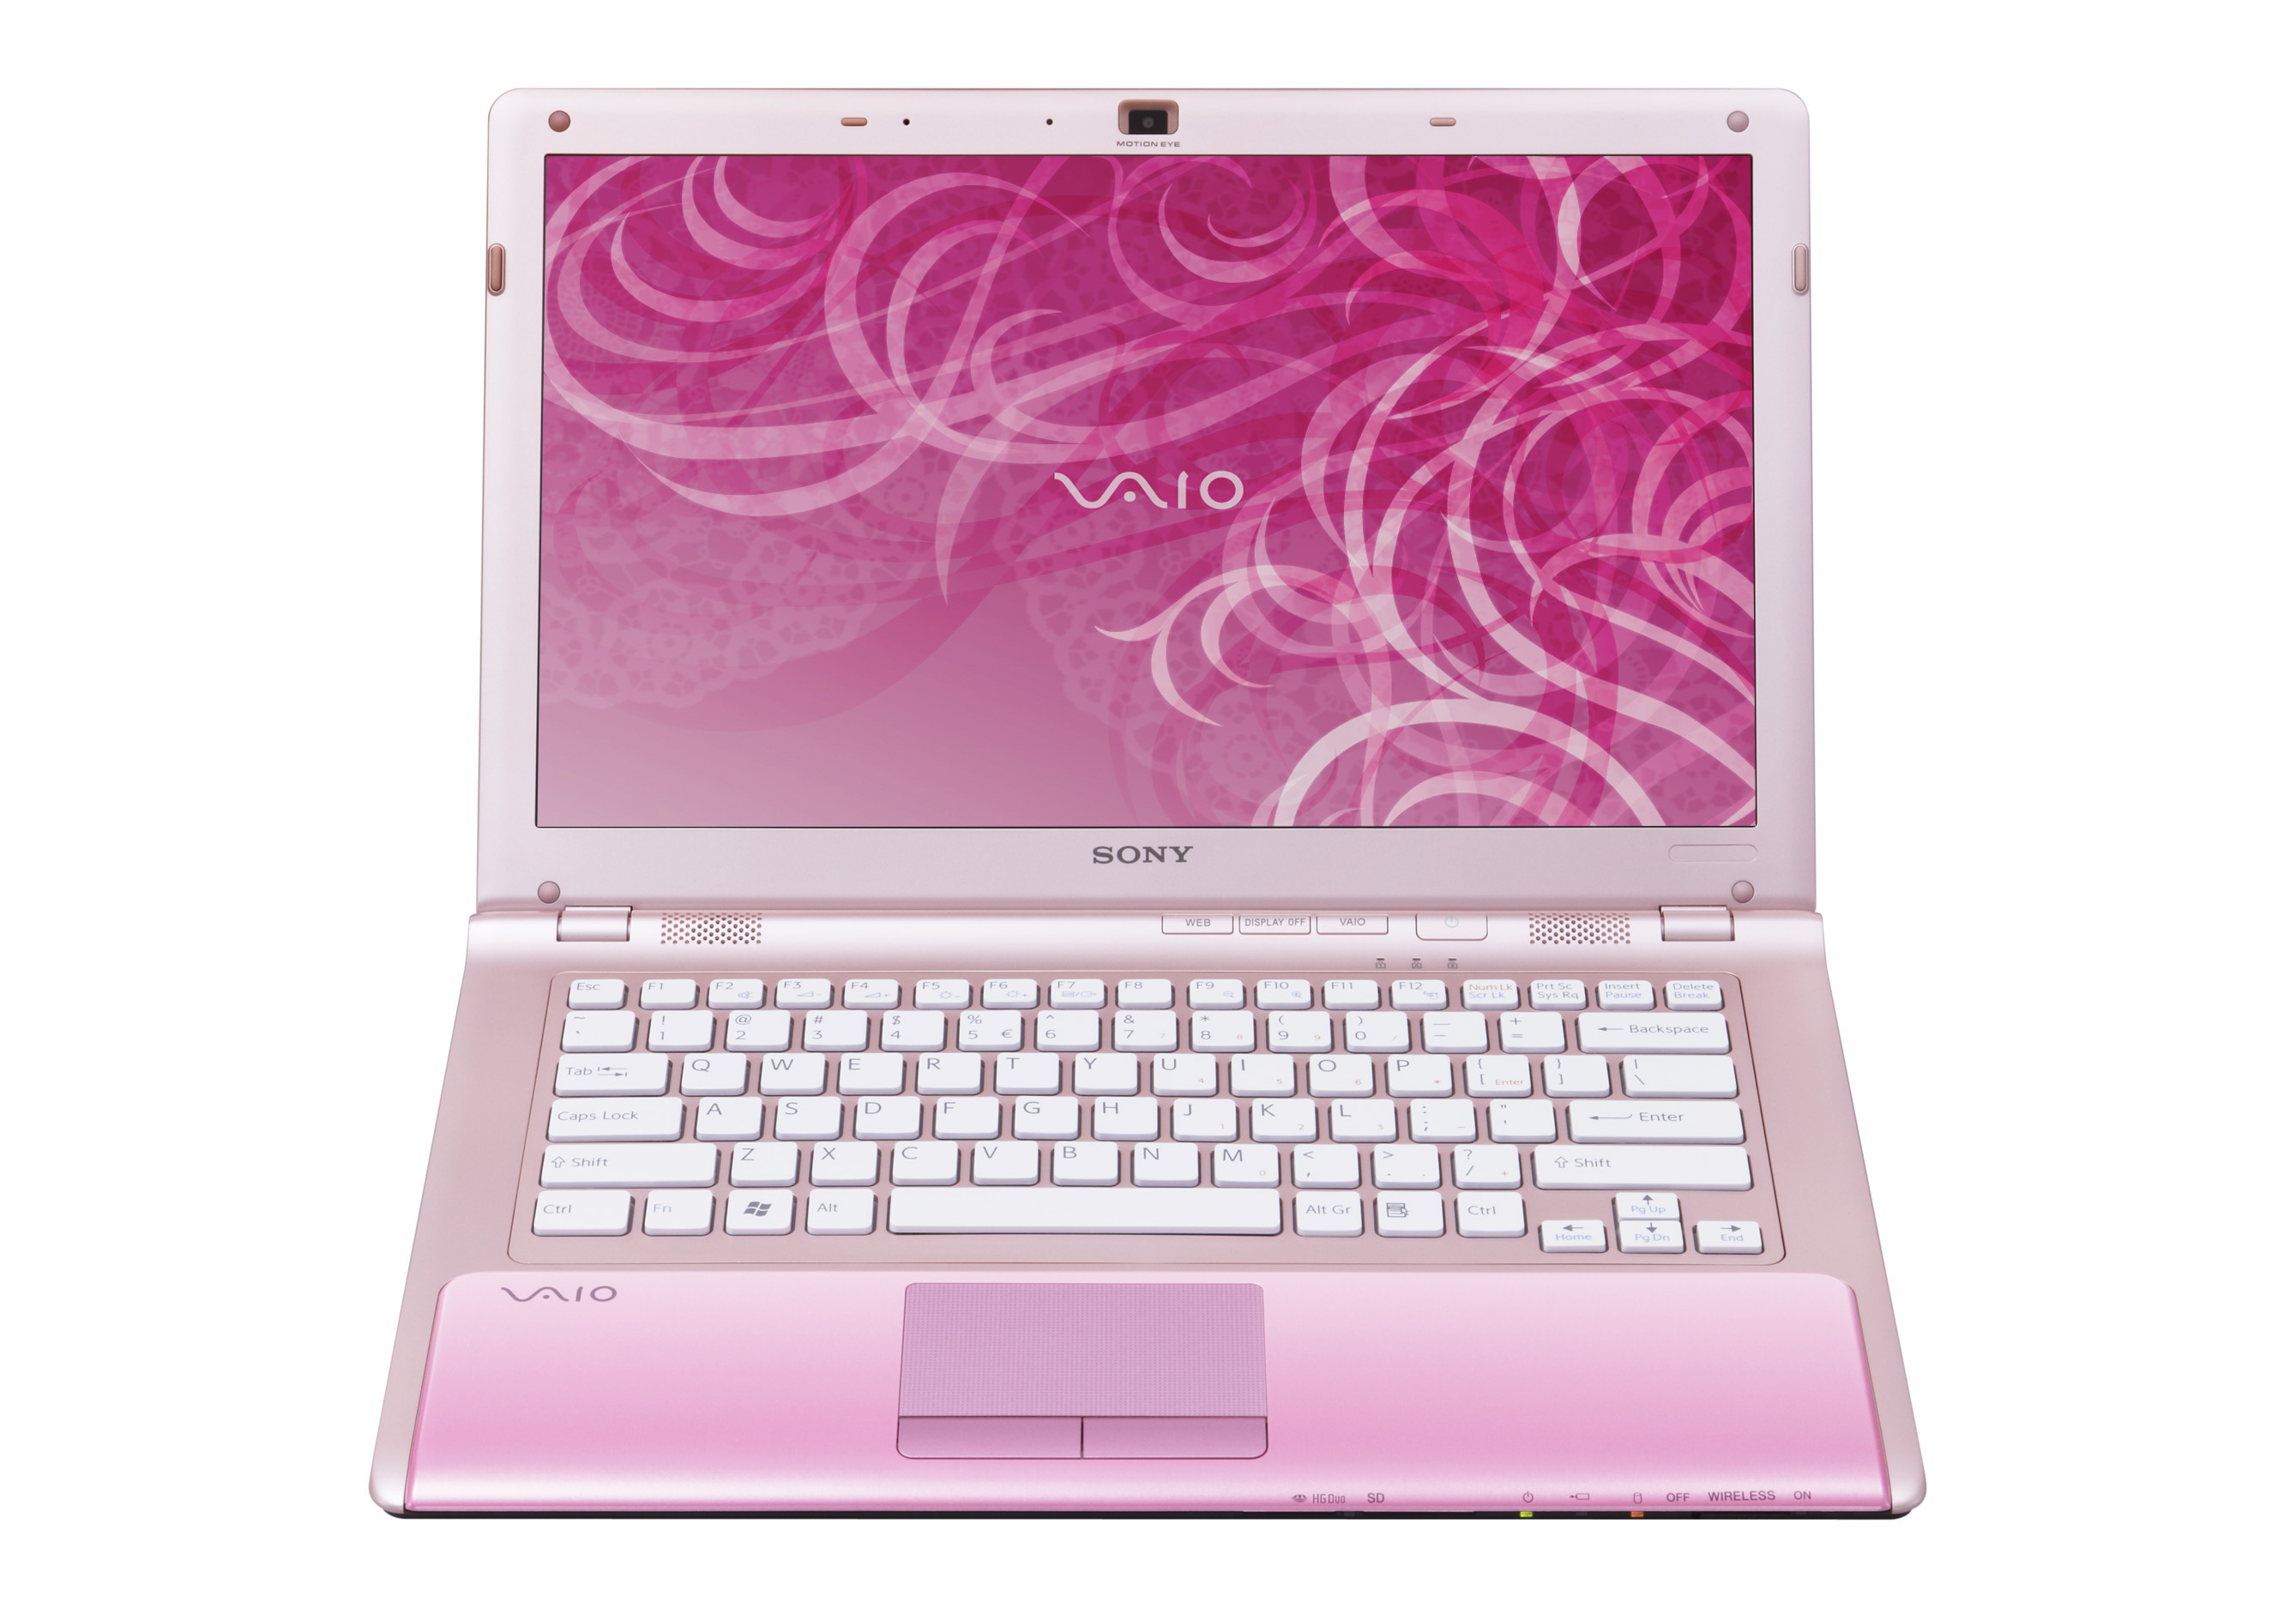 Экран ноутбук sony. Сони Вайо нетбук розовый. Sony vpccw2s1r. Нетбук Sony VAIO розовый. Sony VAIO vpccw2s1r.